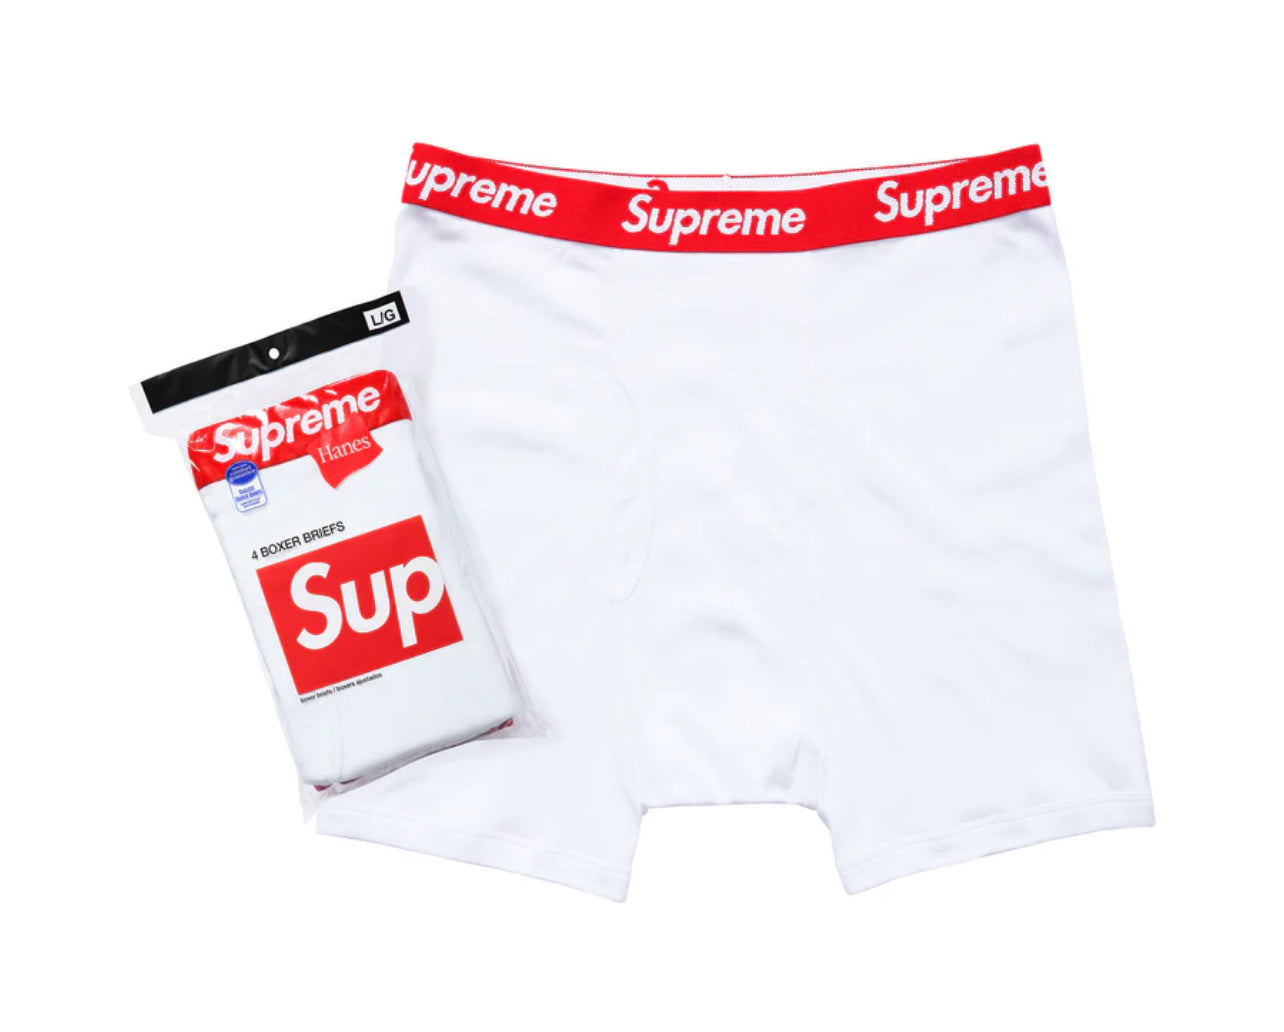 Supreme/Hanes Boxer Briefs (4 Pack)